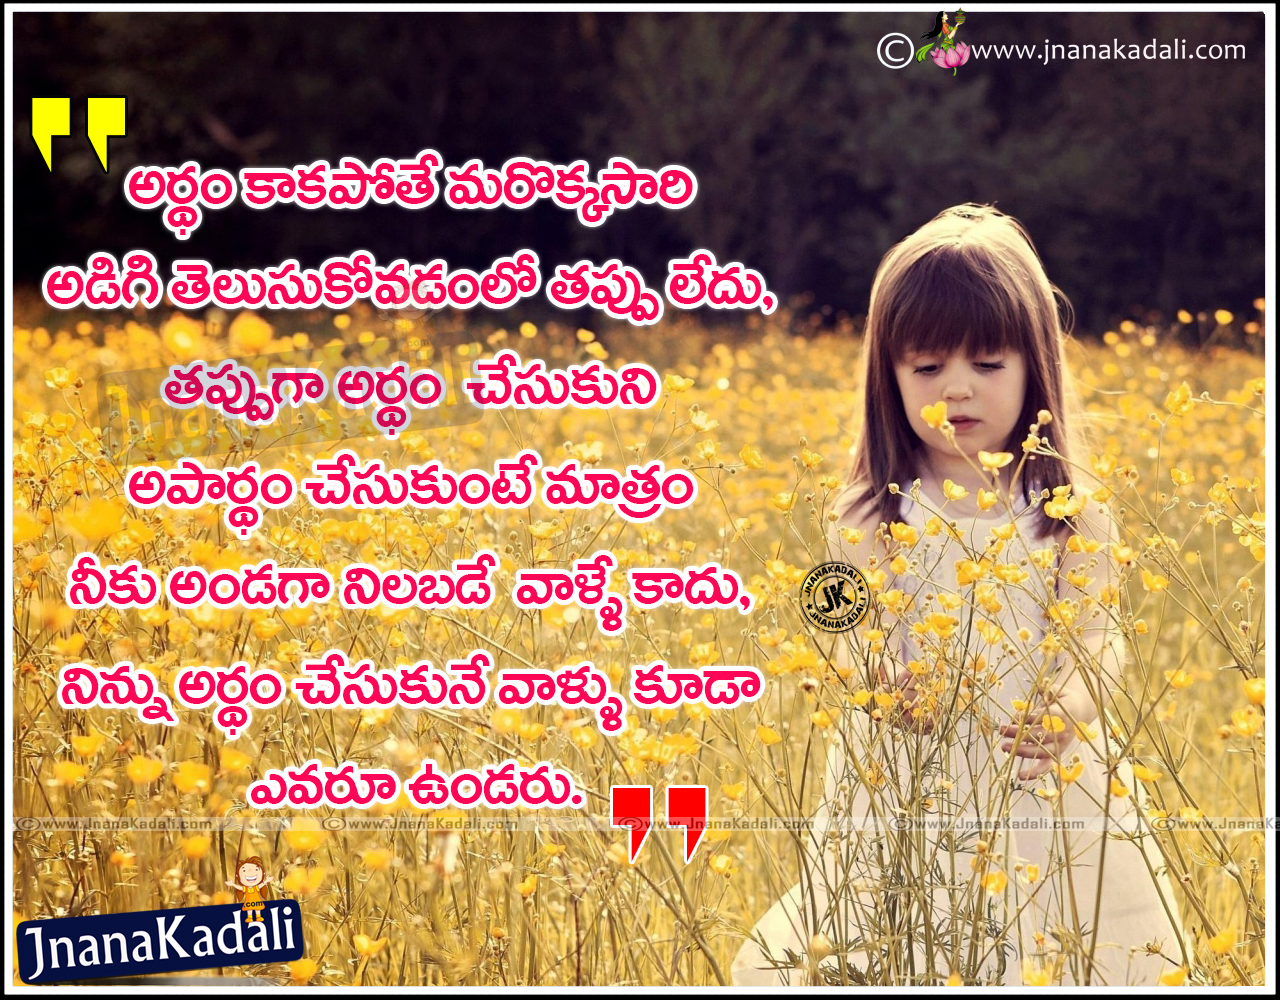 August 2016  JNANA KADALI.COM Telugu QuotesEnglish 